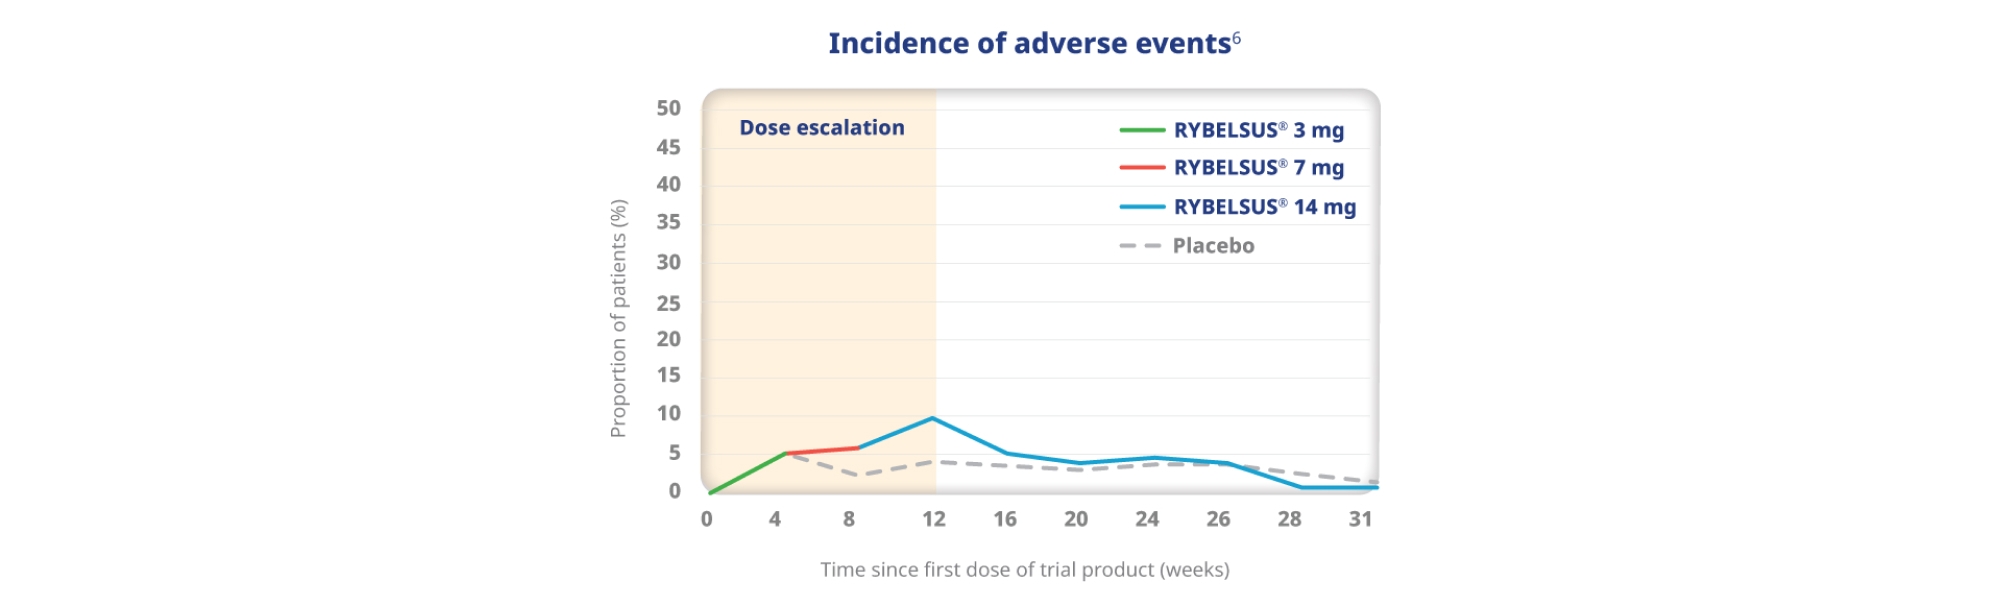 Incedense of adverse events